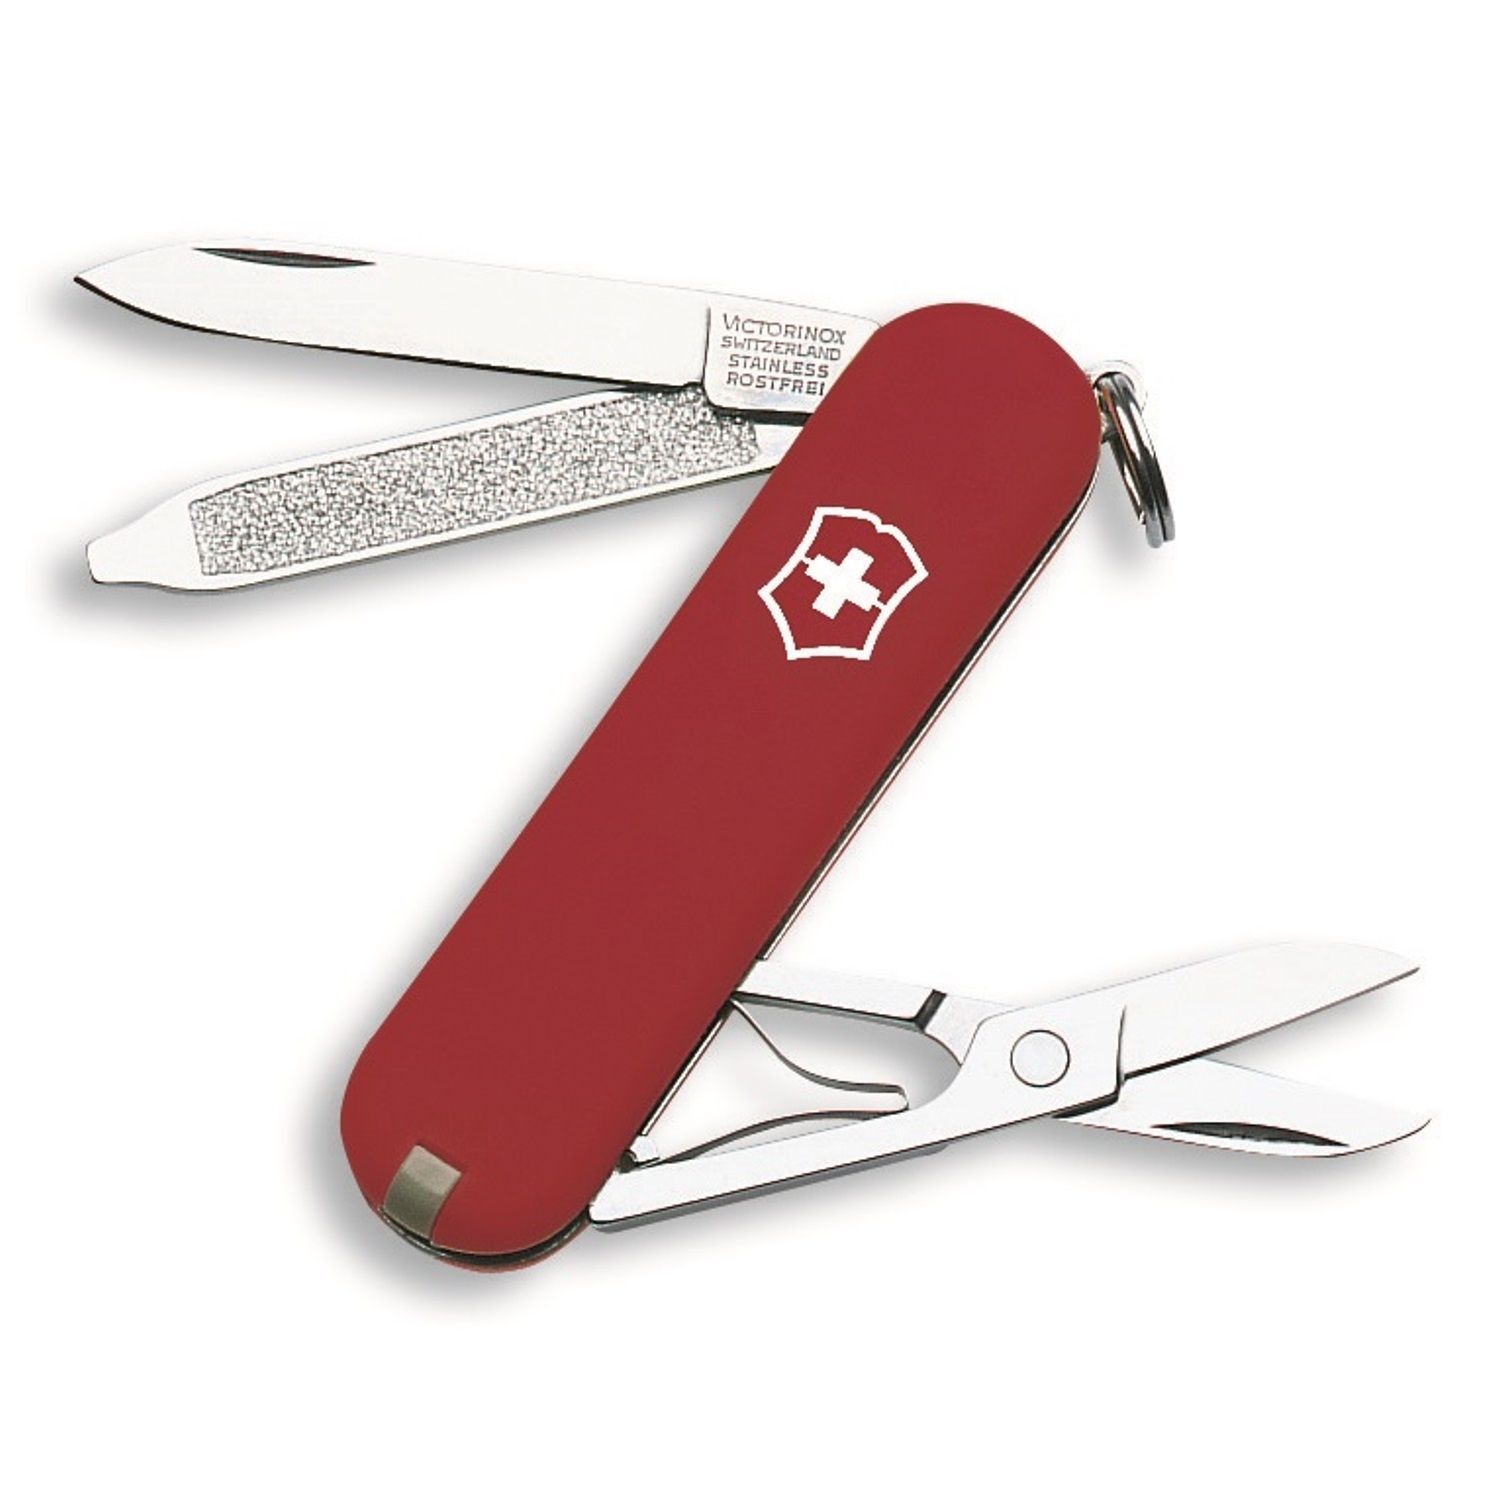 NEW VICTORINOX SWISS ARMY KNIFE Multi Pocket Tool Gadget CLASSIC RED eBay